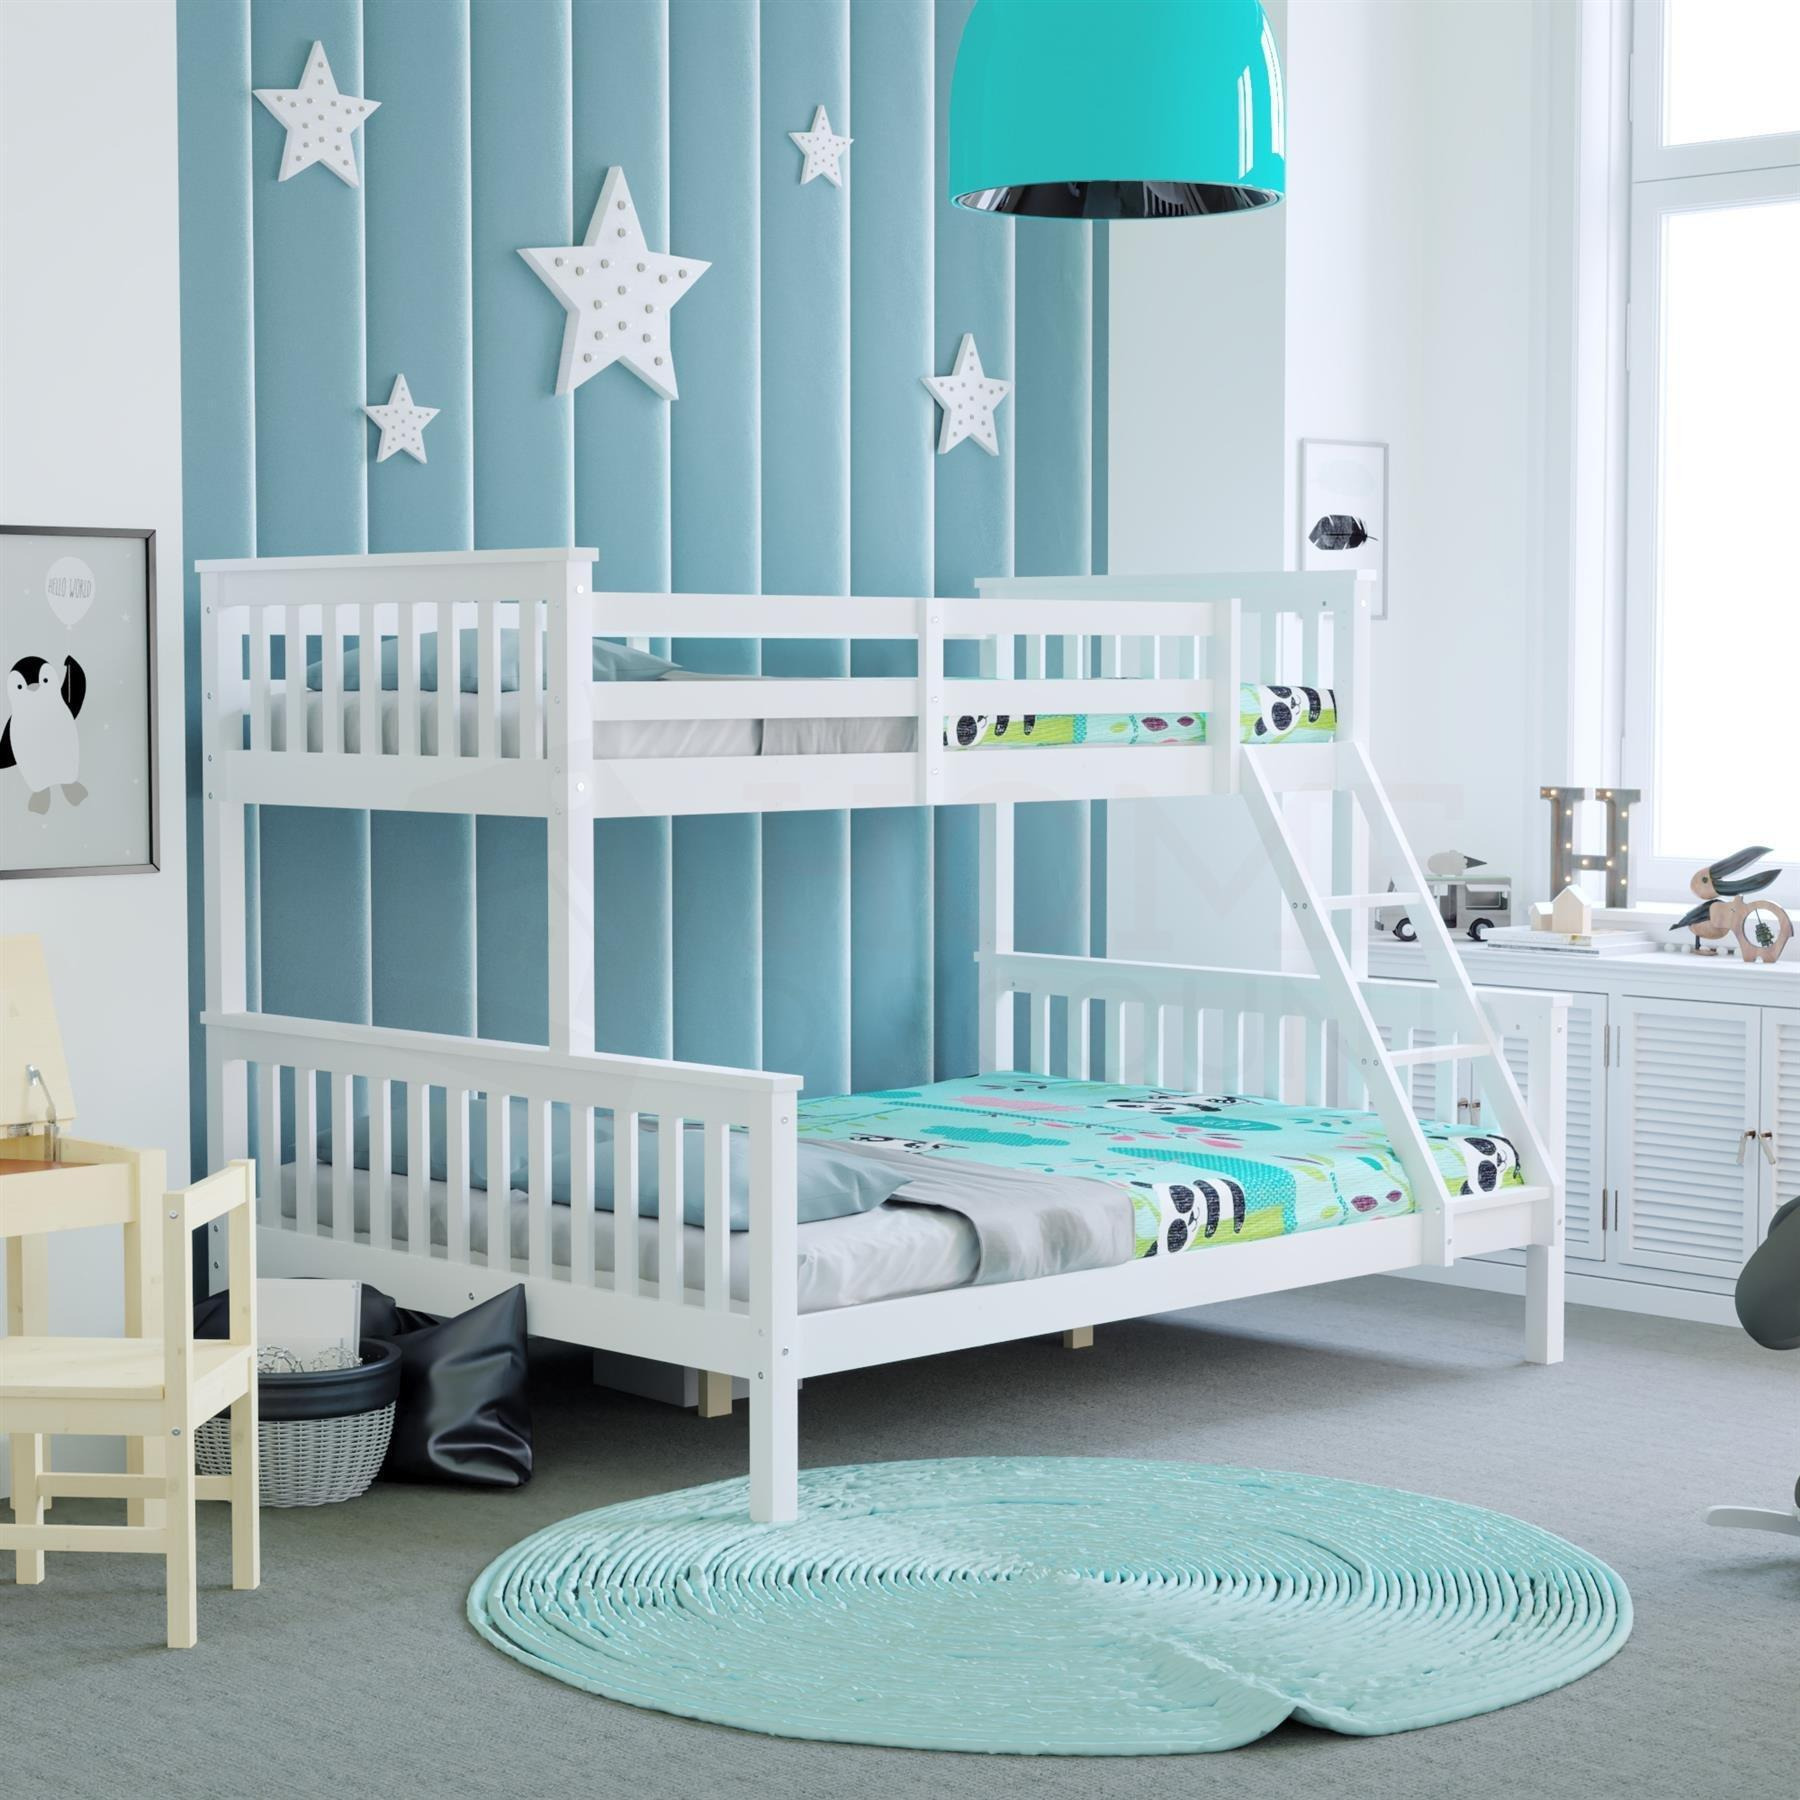 Vida Designs Milan Triple Sleeper Bunk Bed Frame Bedroom Furniture - image 1